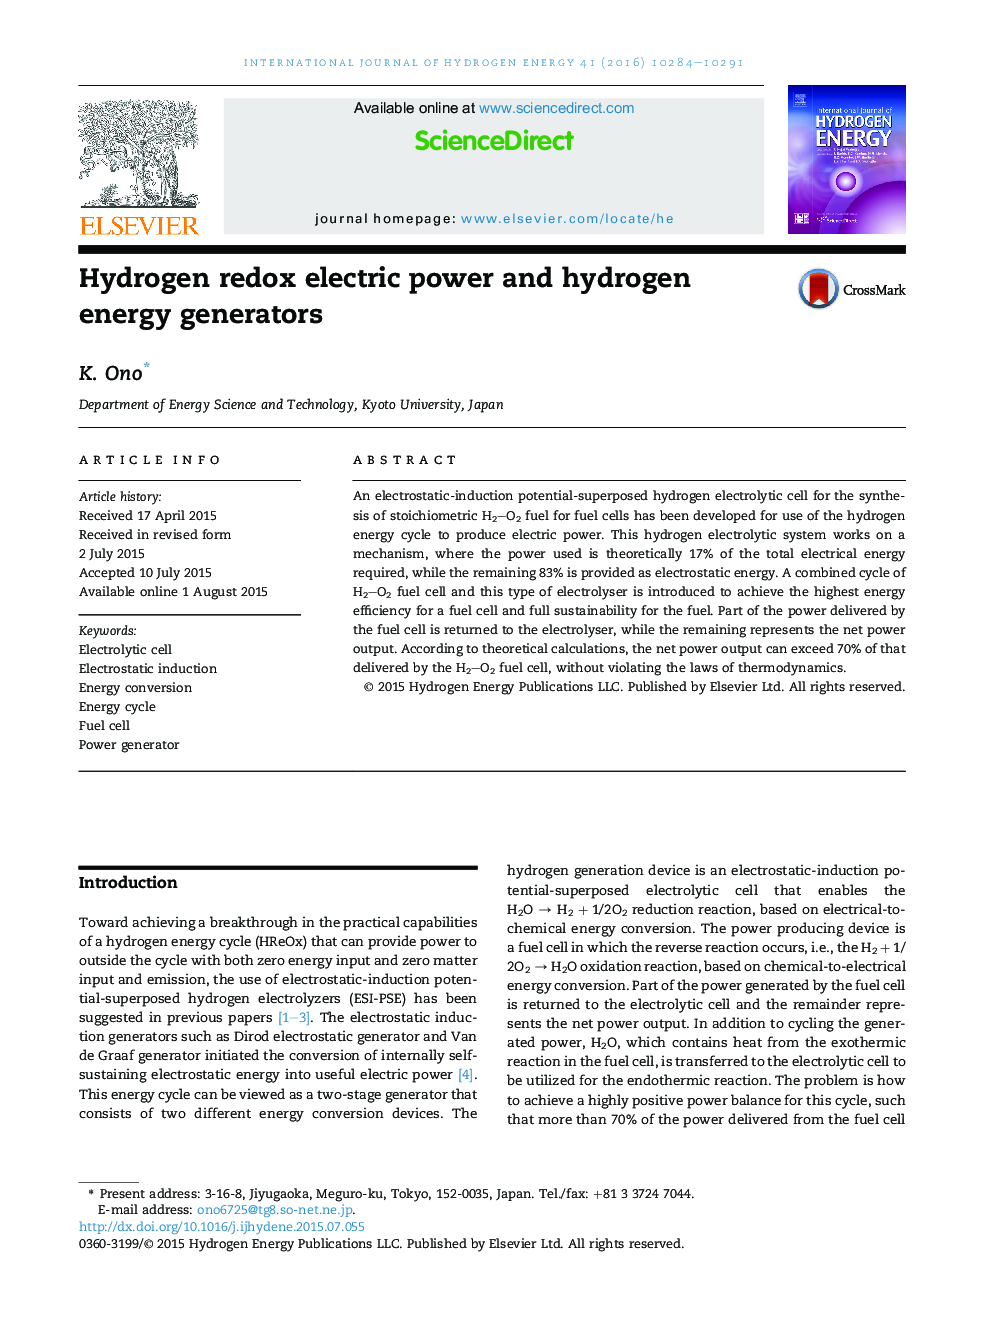 Hydrogen redox electric power and hydrogen energy generators